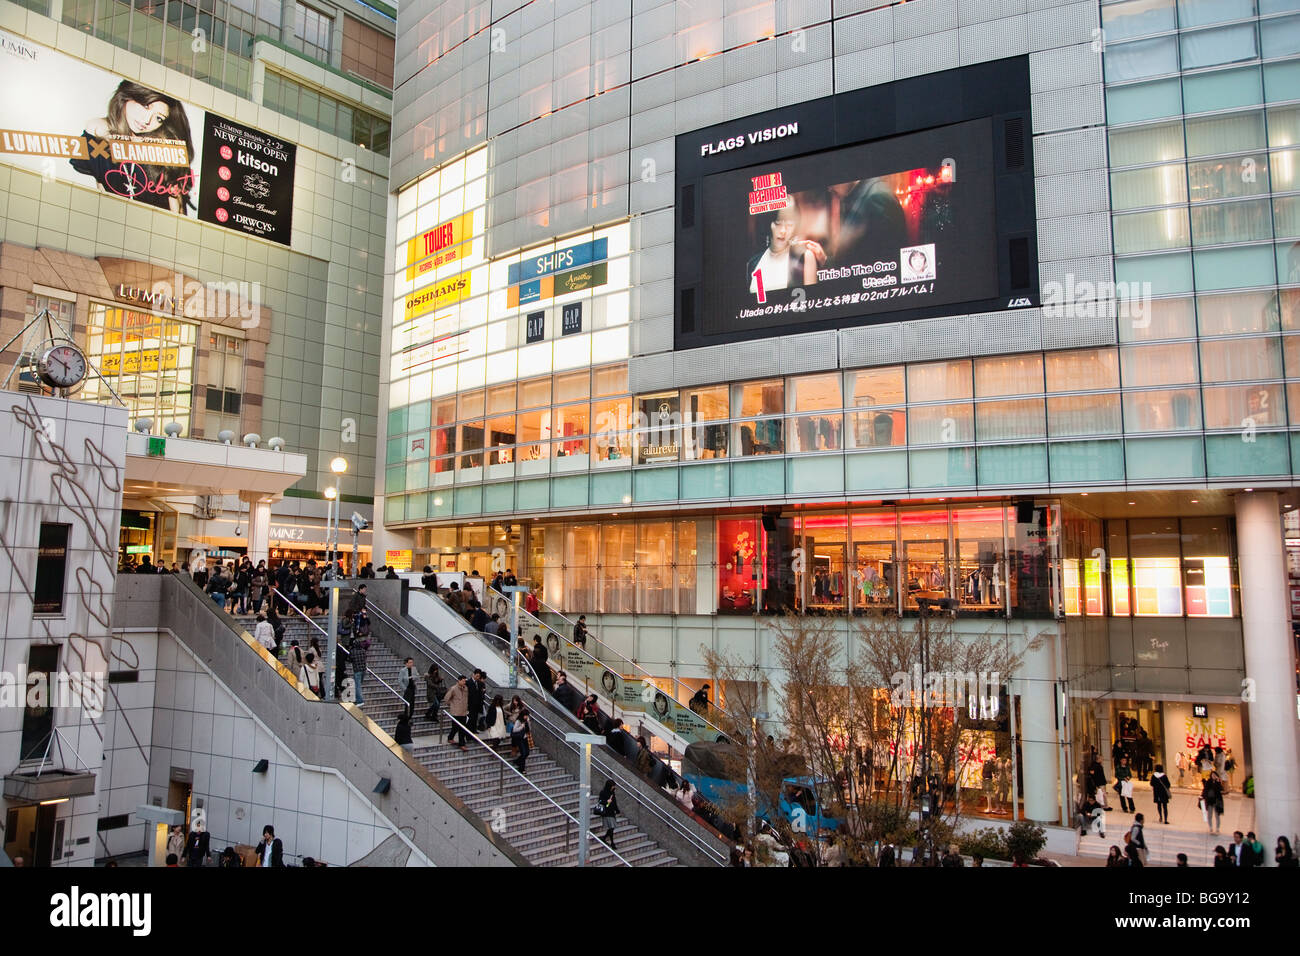 The plaza between Flags and Lumine 2 department stores, Shinjuku, Tokyo, Japan Stock Photo